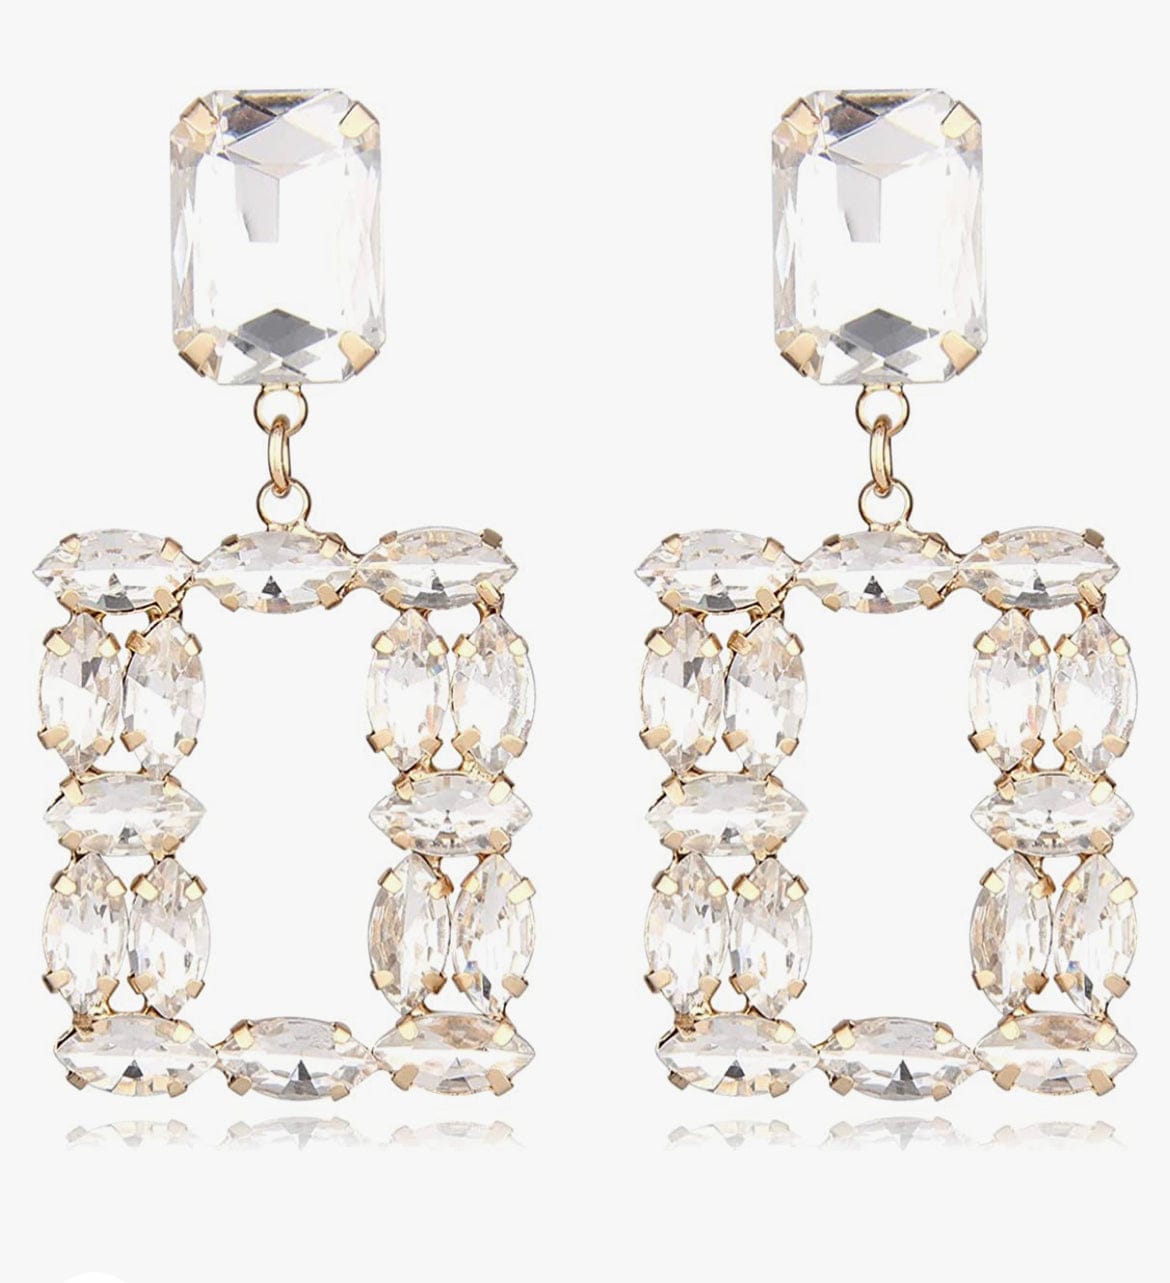 Squared crystal earrings